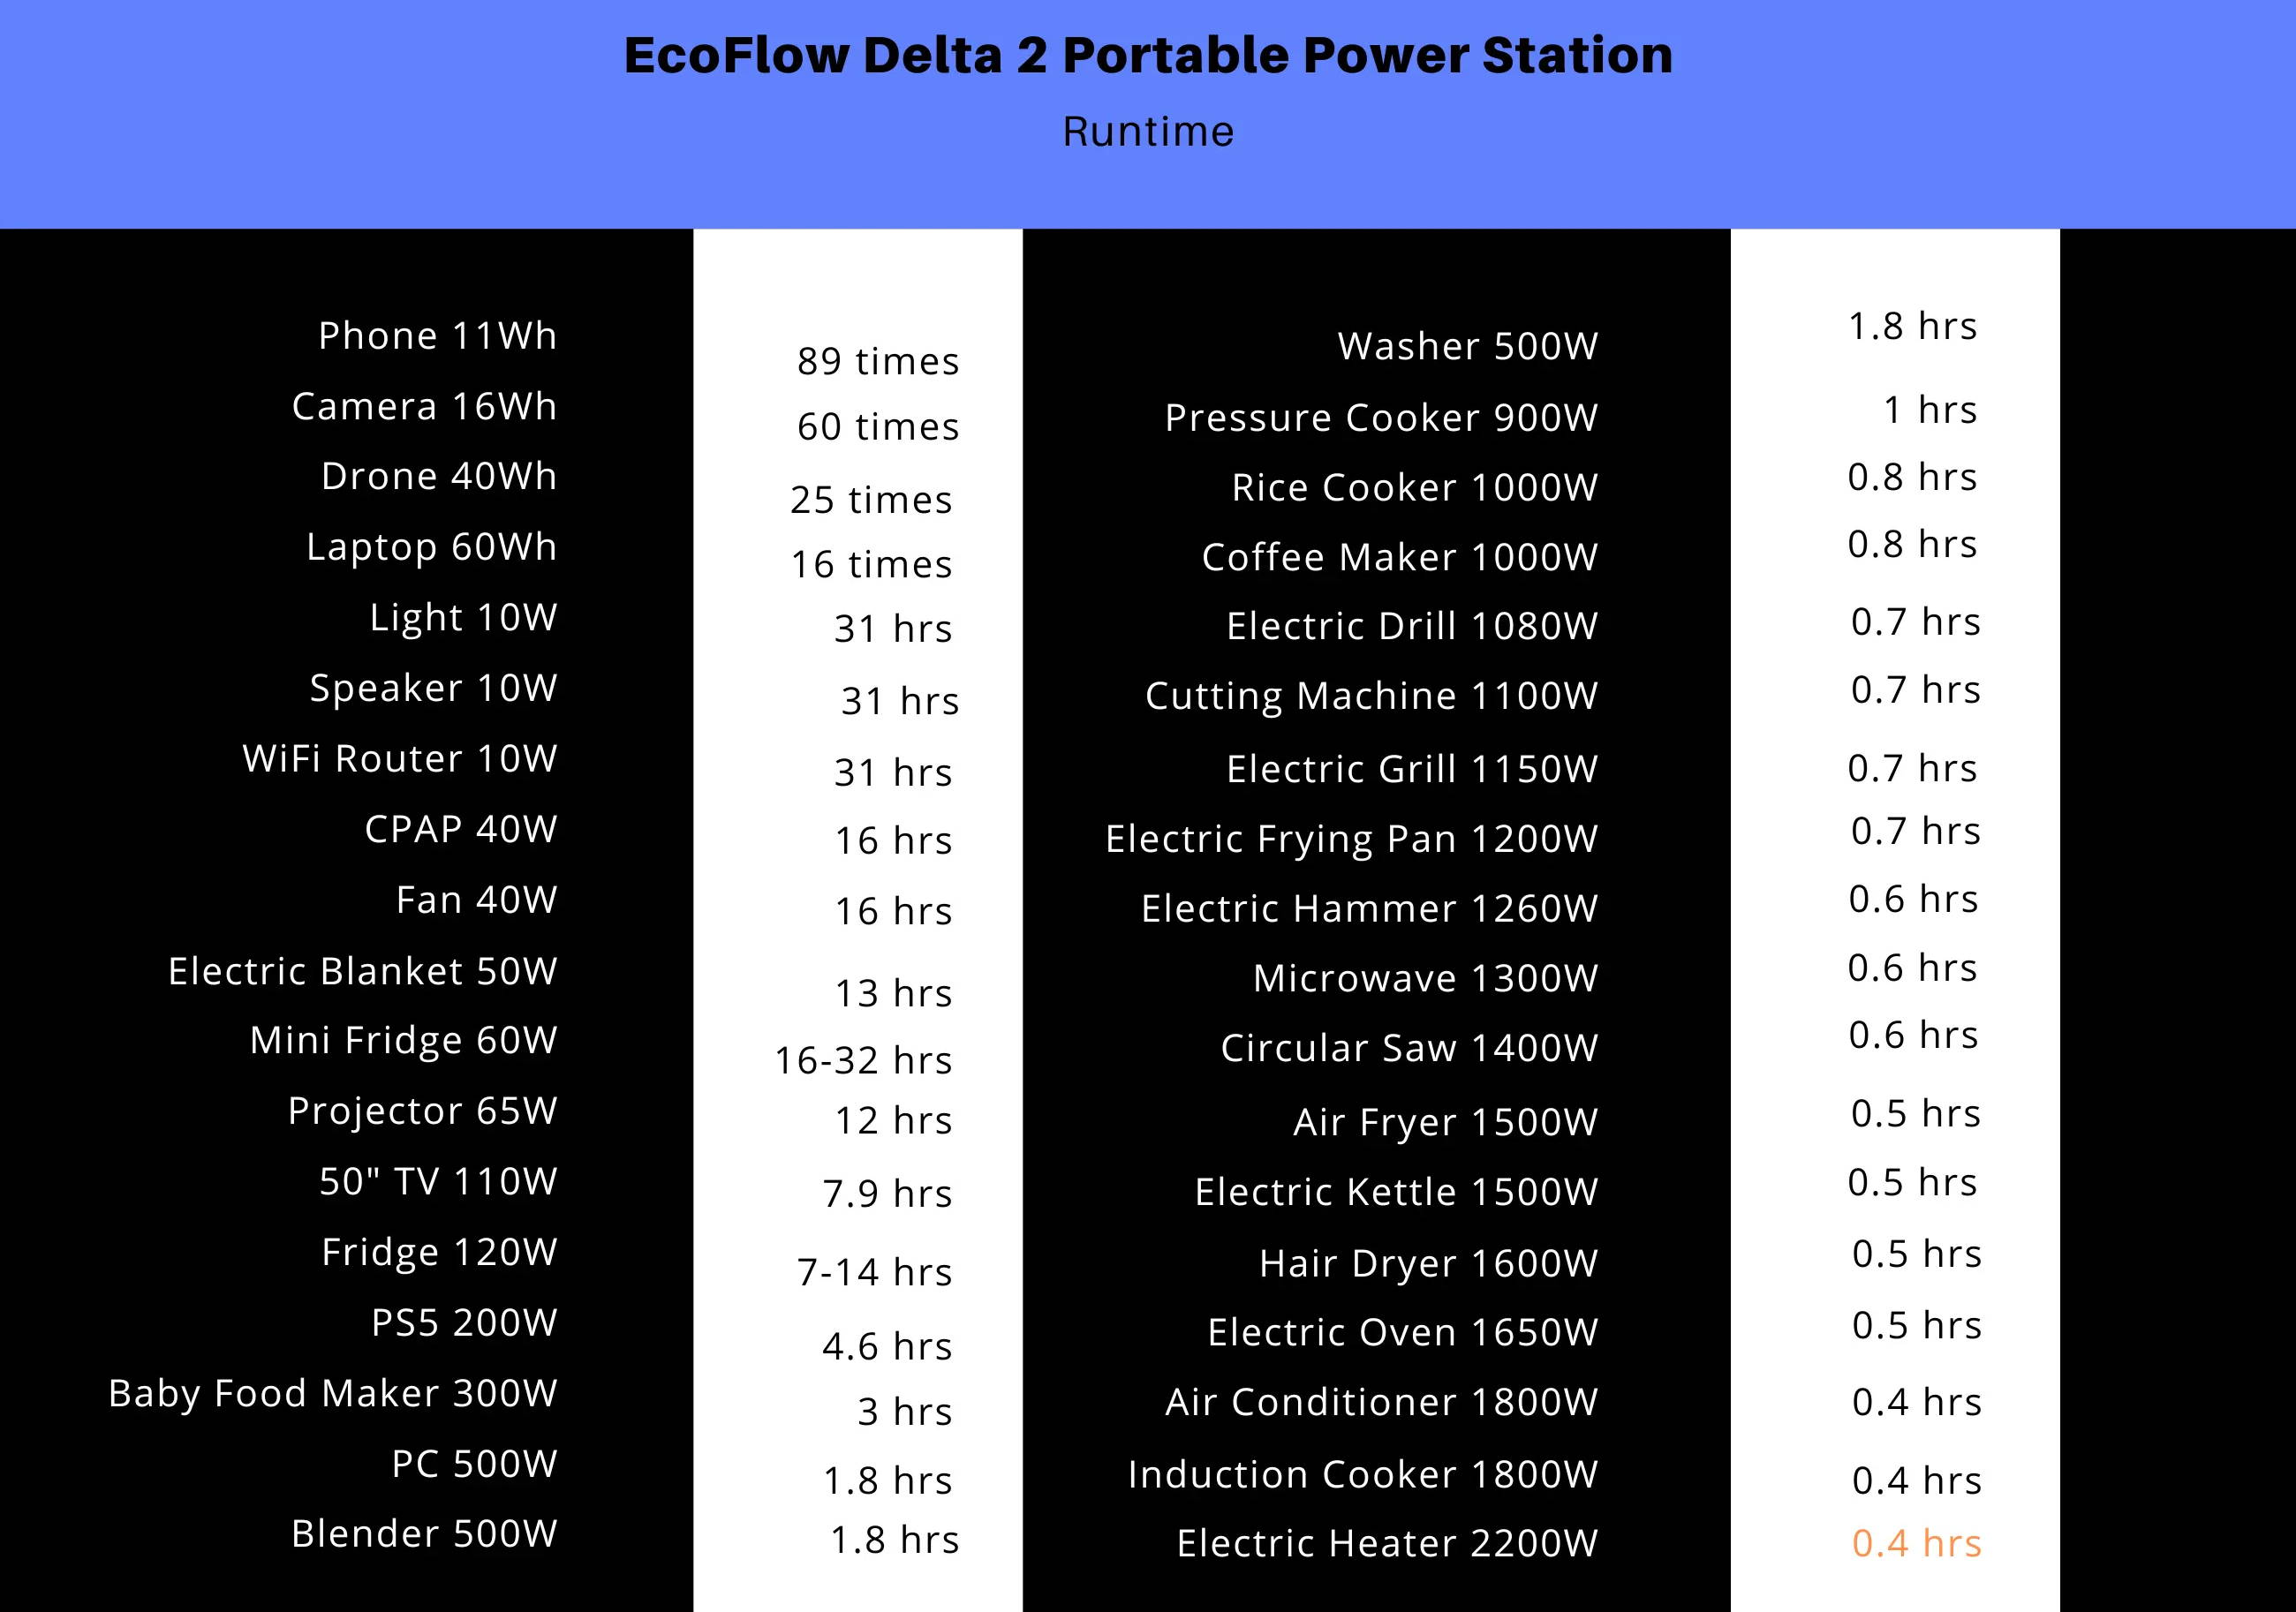 EcoFlow Delta 2 Portable Power Station Runtime